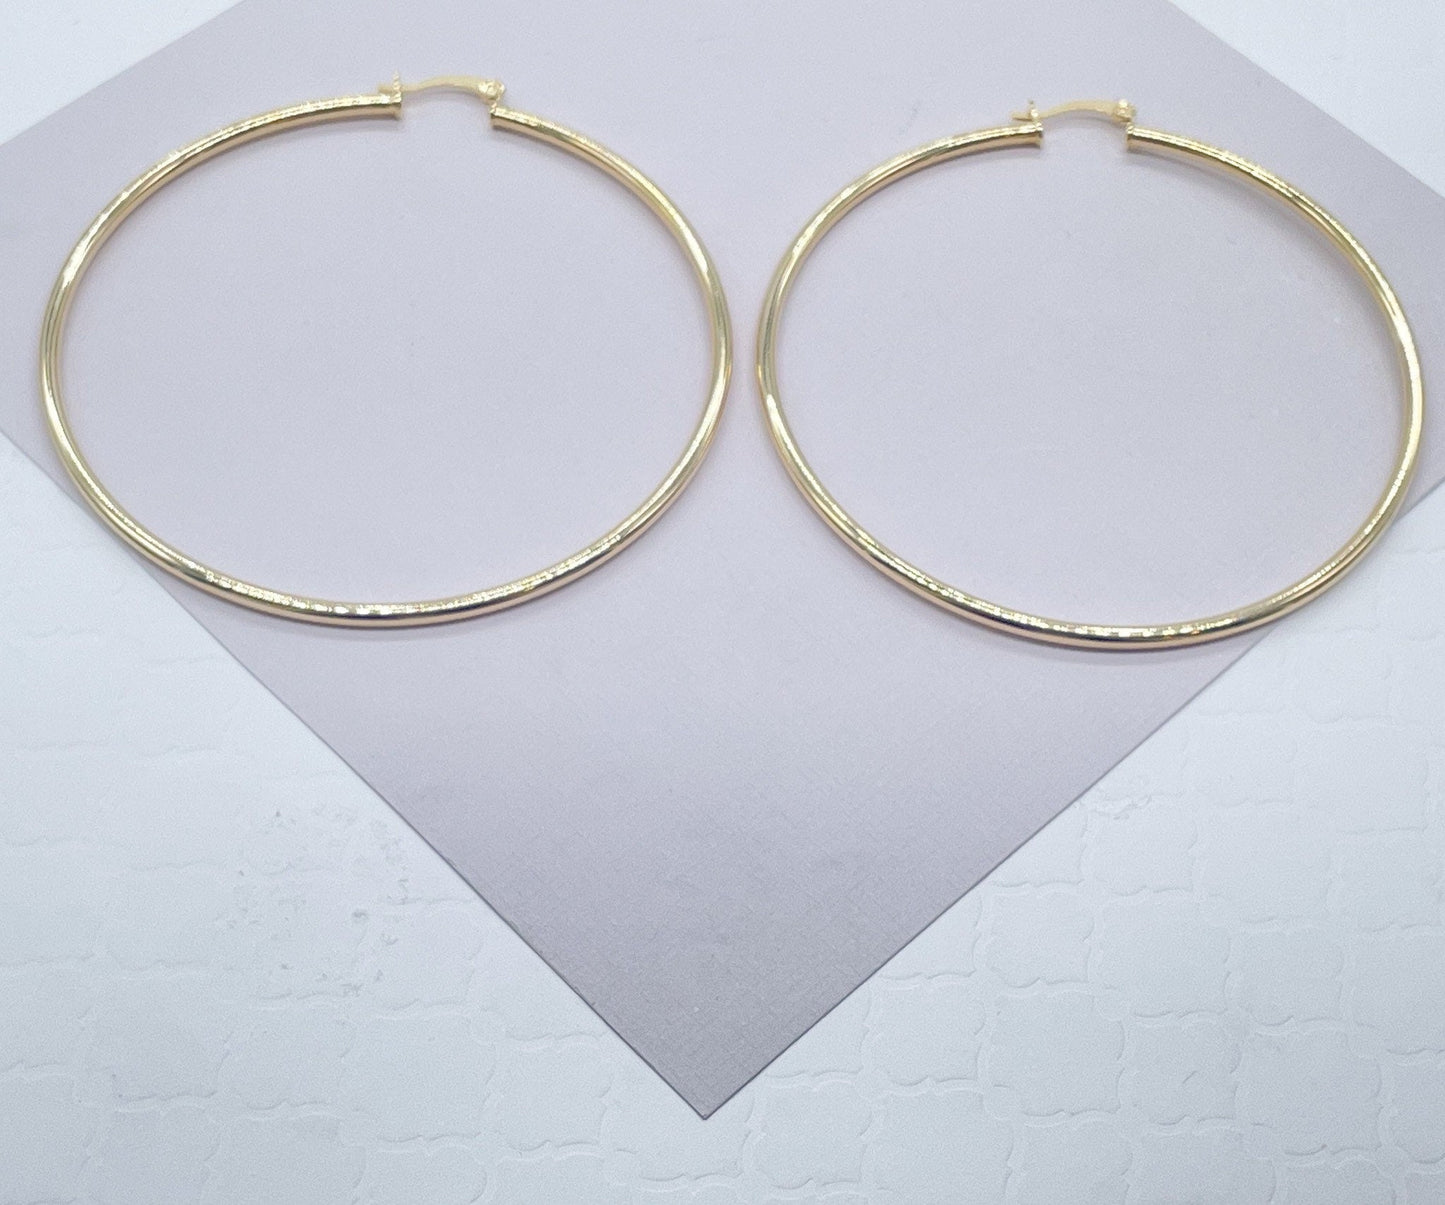 80mm Diameter 18k Gold Layered Thin Thread Hoop Earrings, Large Gold Plain